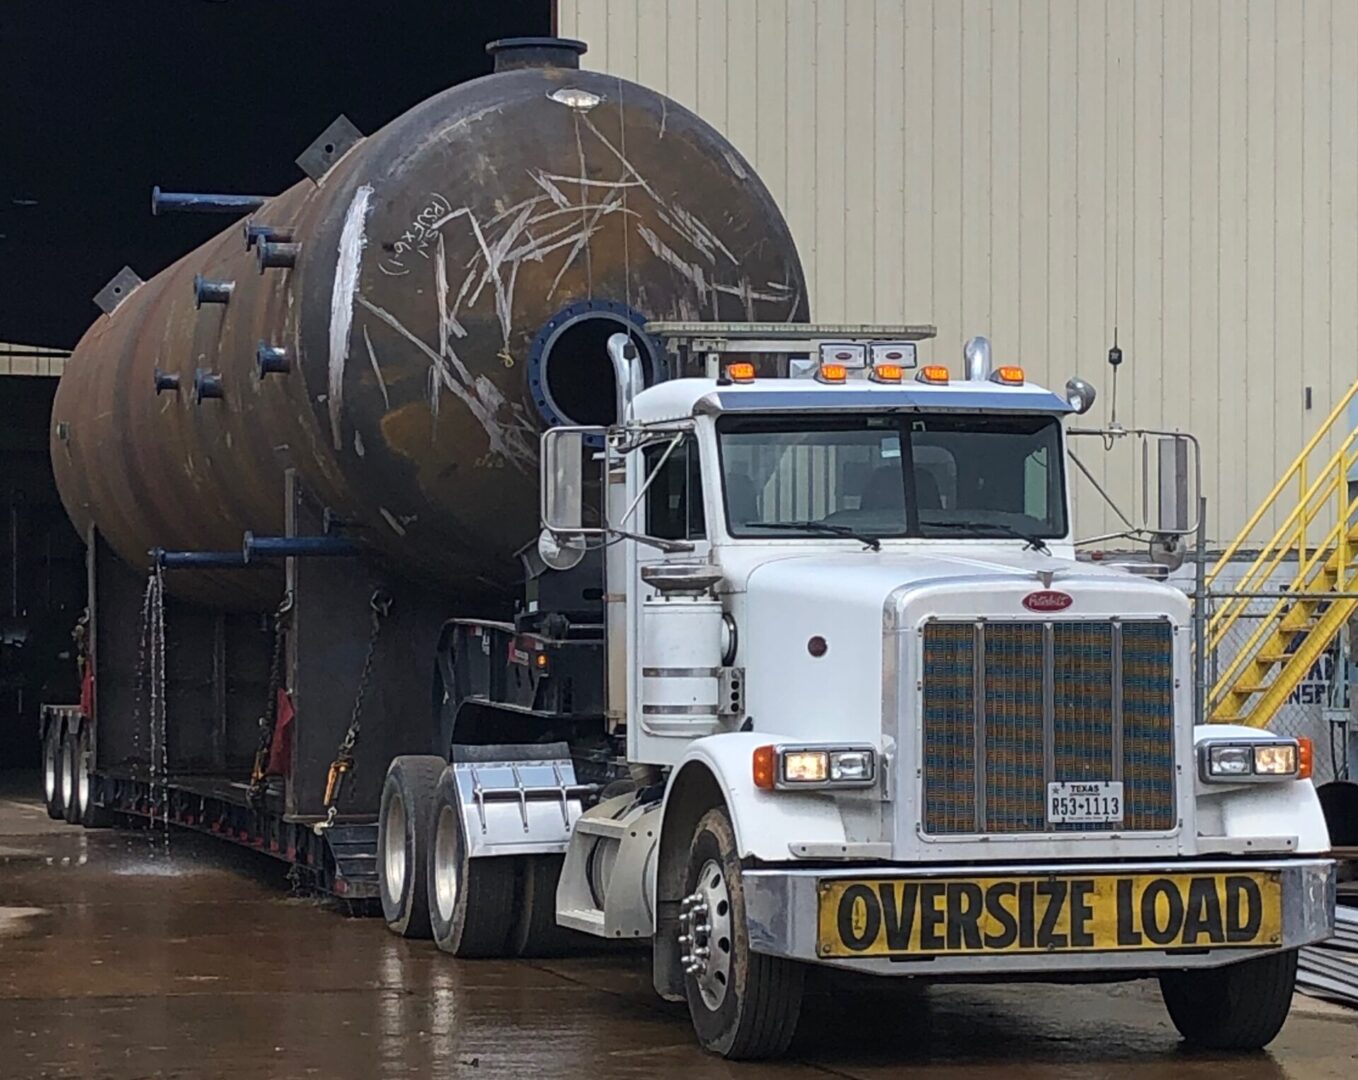 a trailer truck carrying a big tank